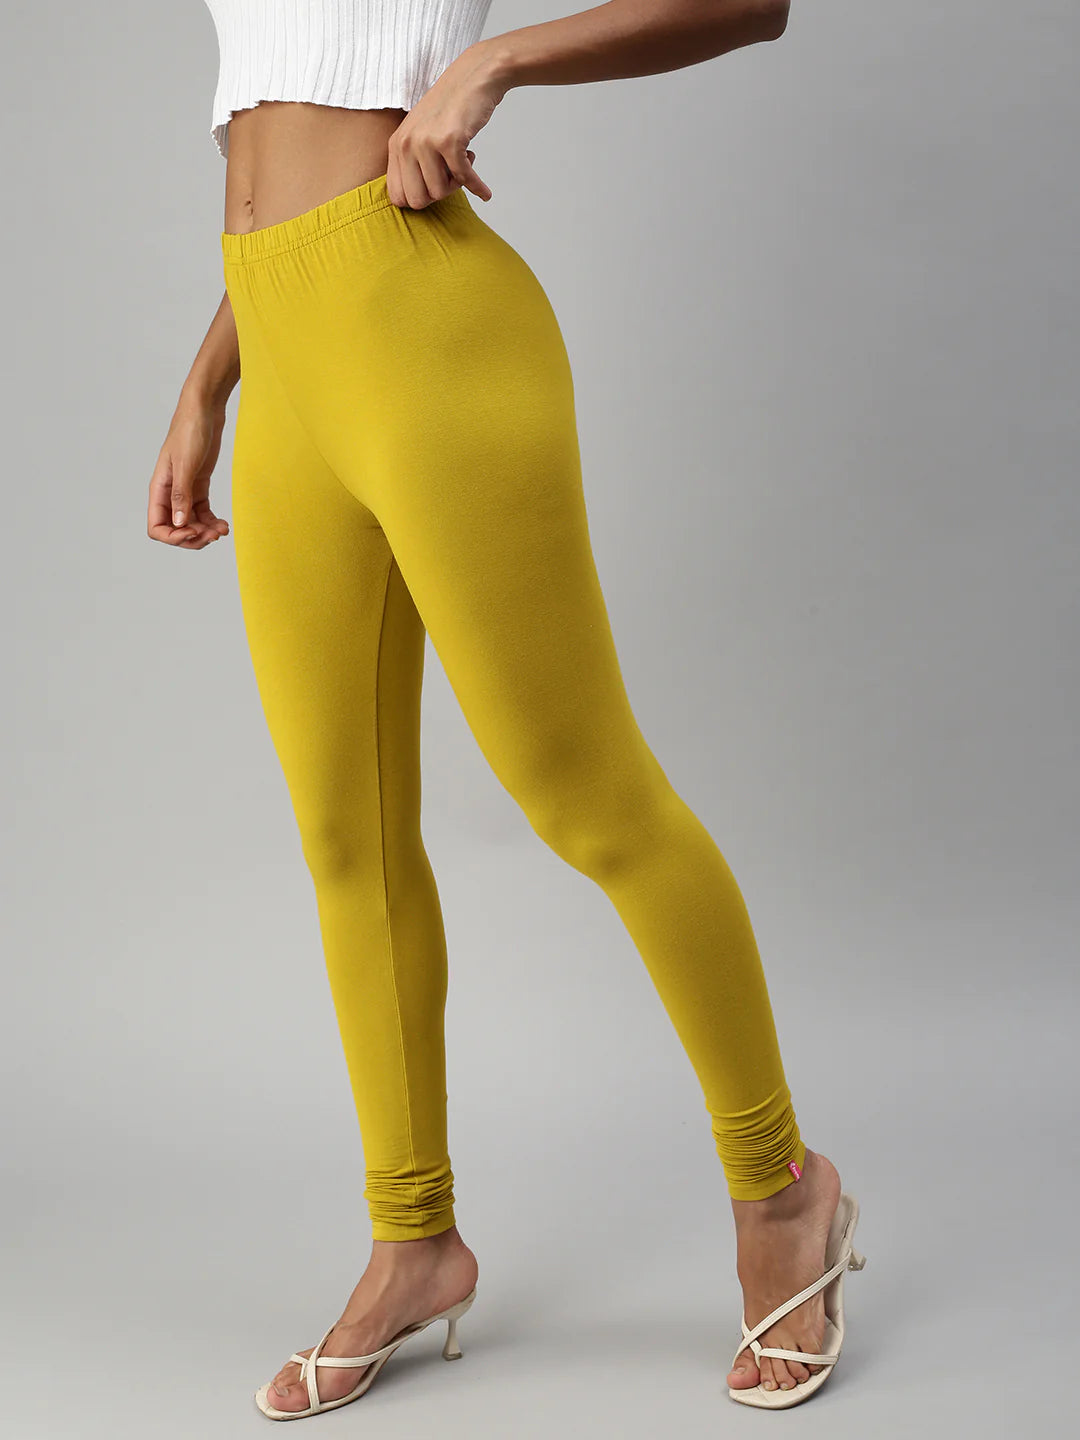 Prisma Ladies churidar Leggings - 60 Colours - 3XL Size - Hip Size 46 to 48 inches